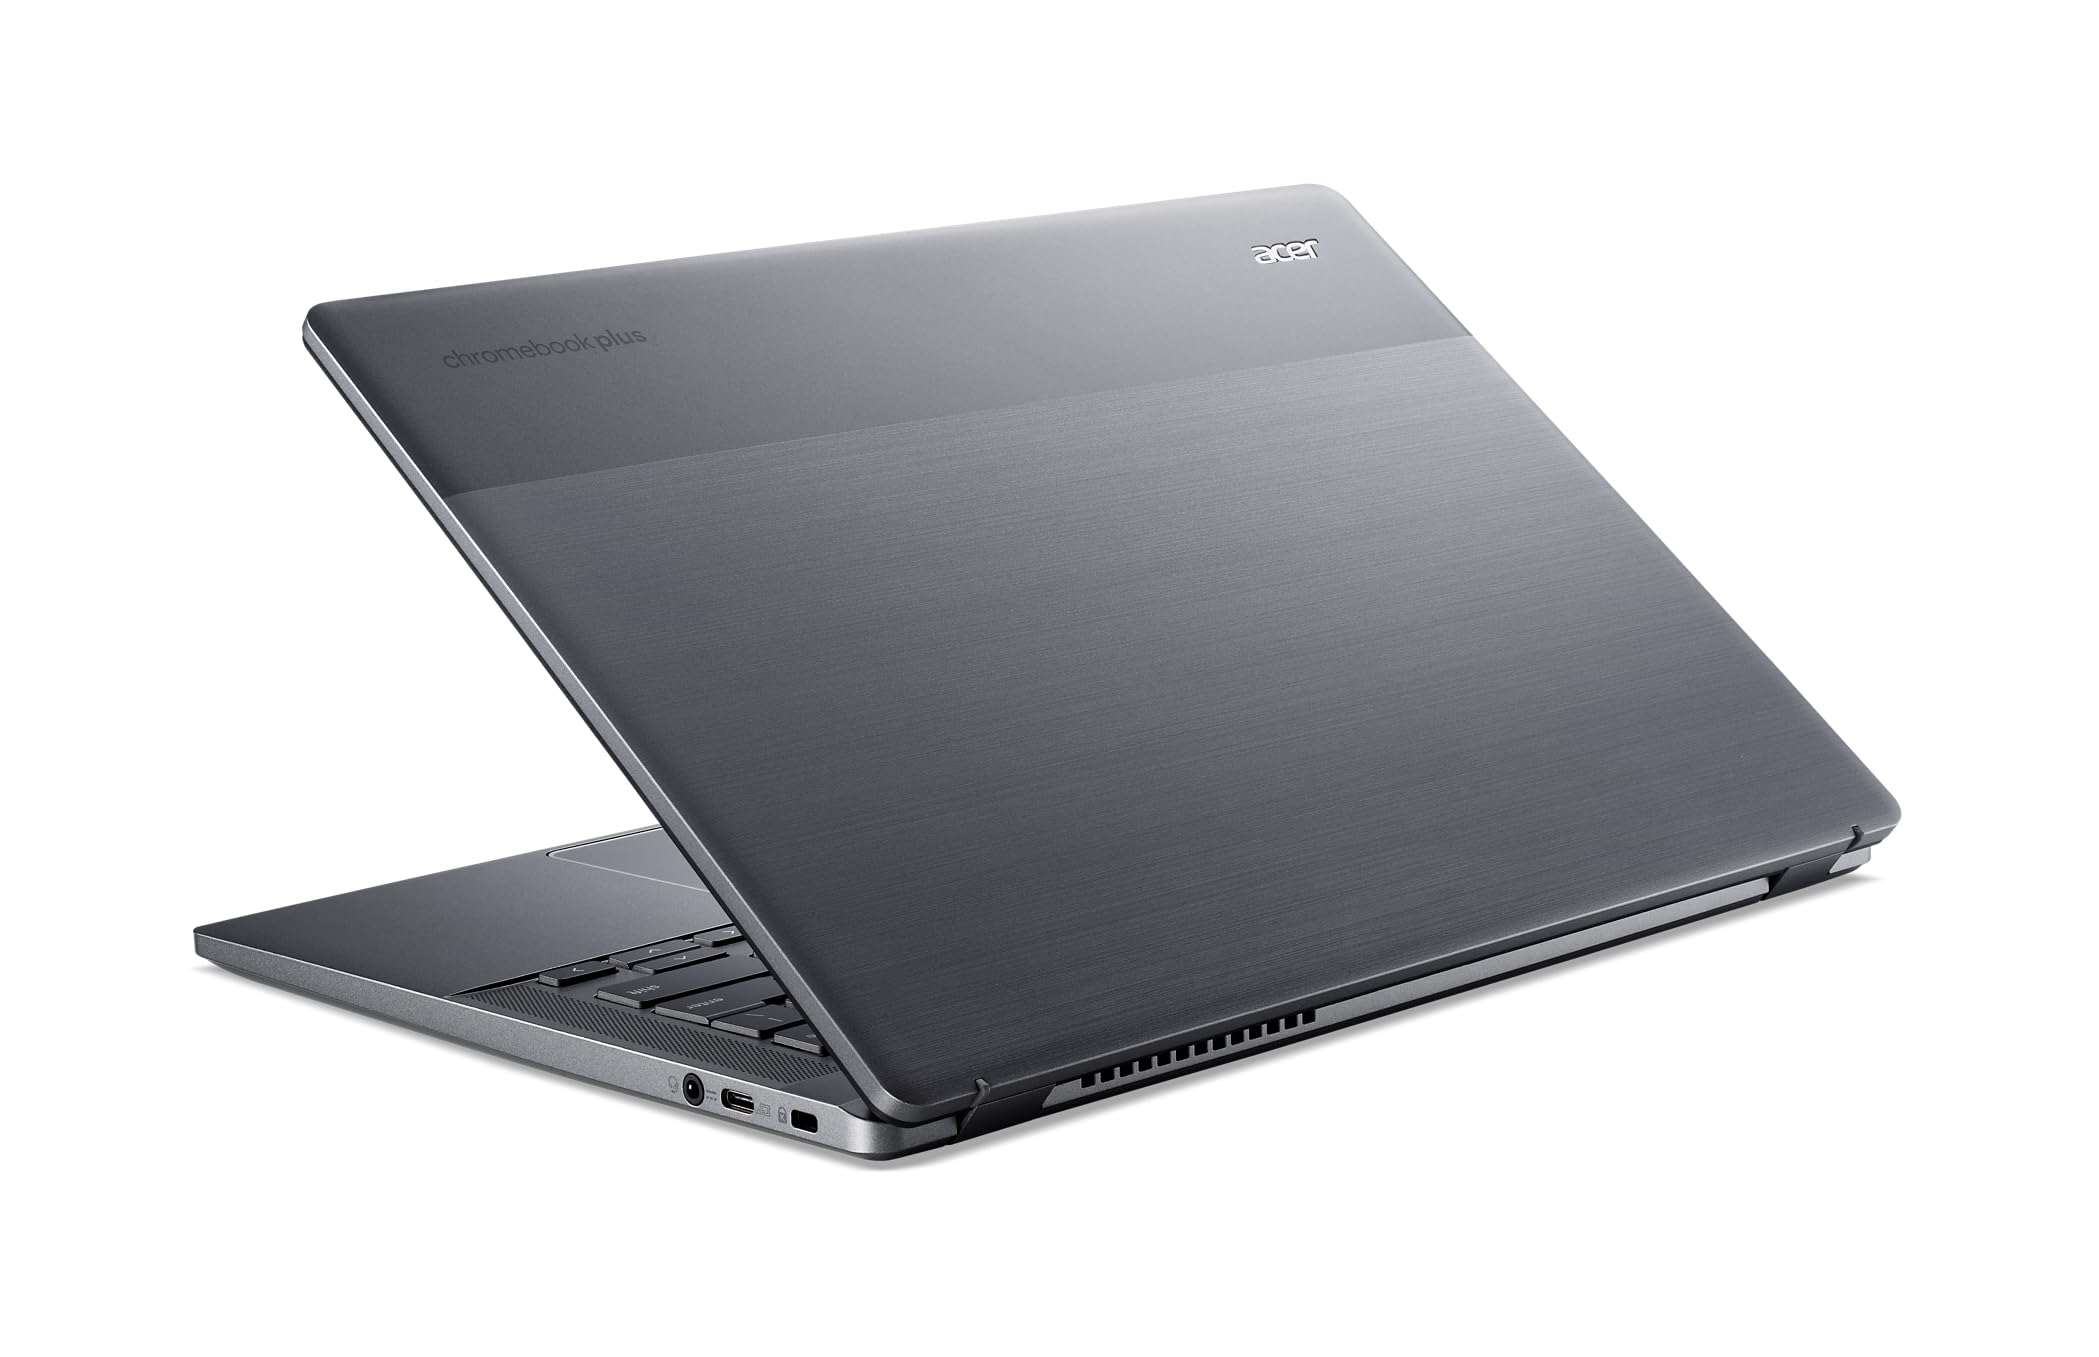 Acer Chromebook Plus 514 Laptop – 14